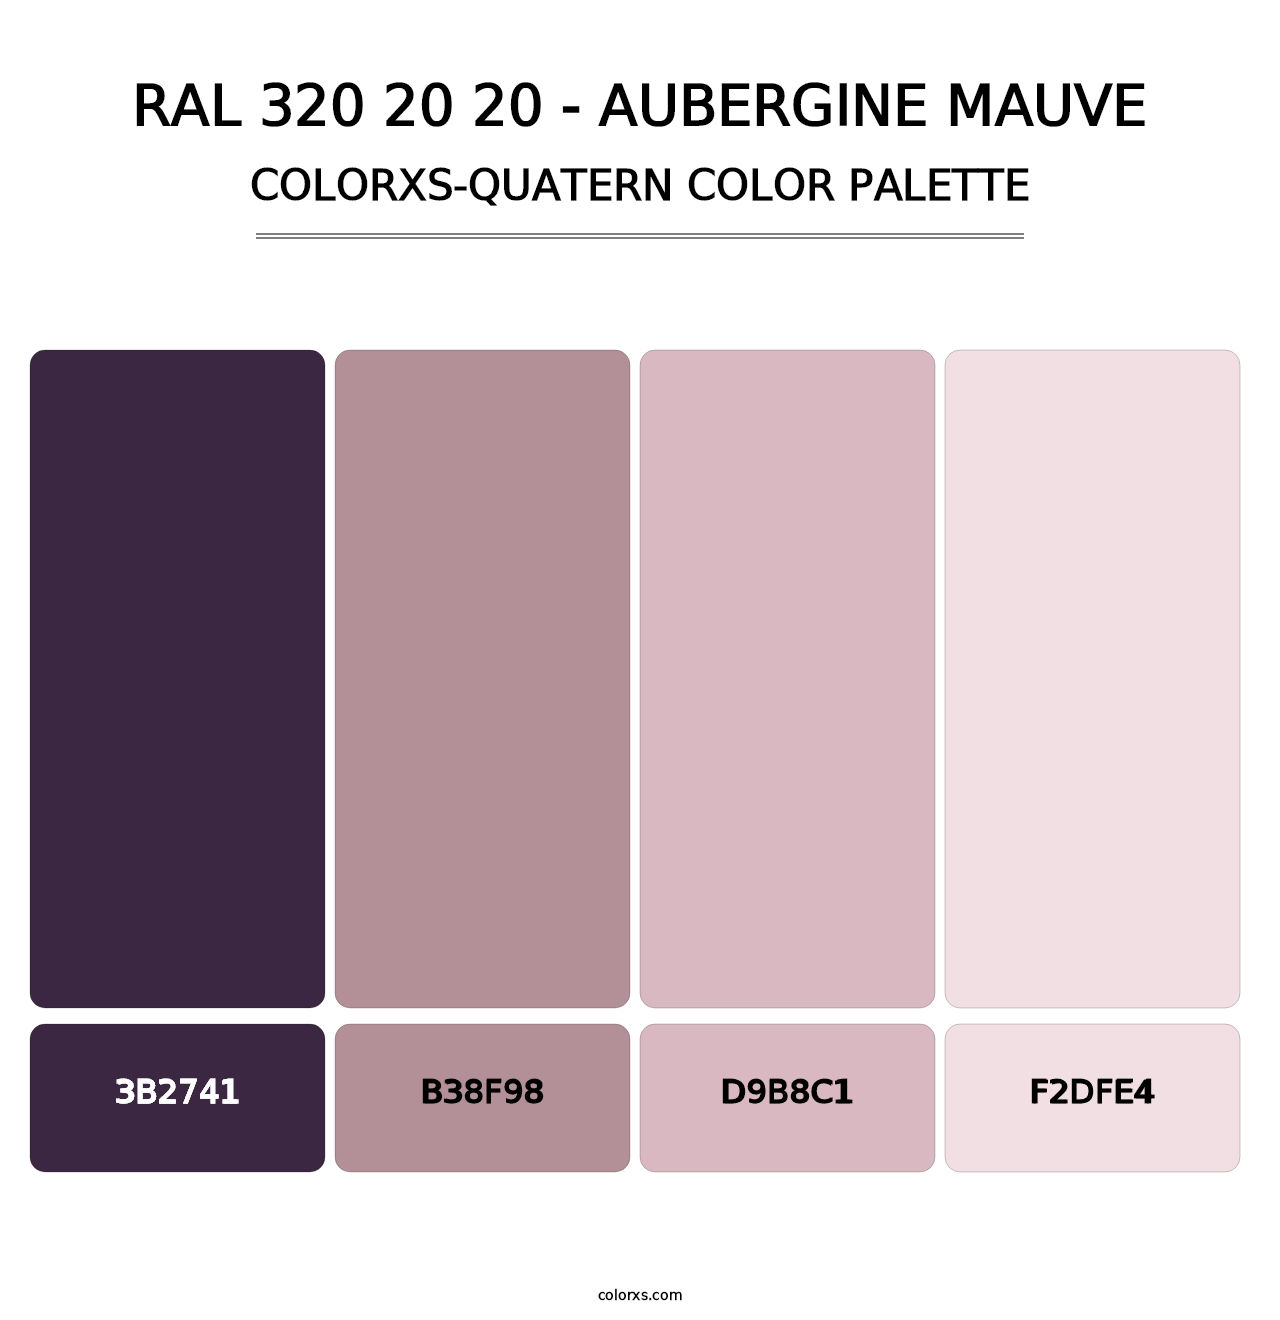 RAL 320 20 20 - Aubergine Mauve - Colorxs Quatern Palette